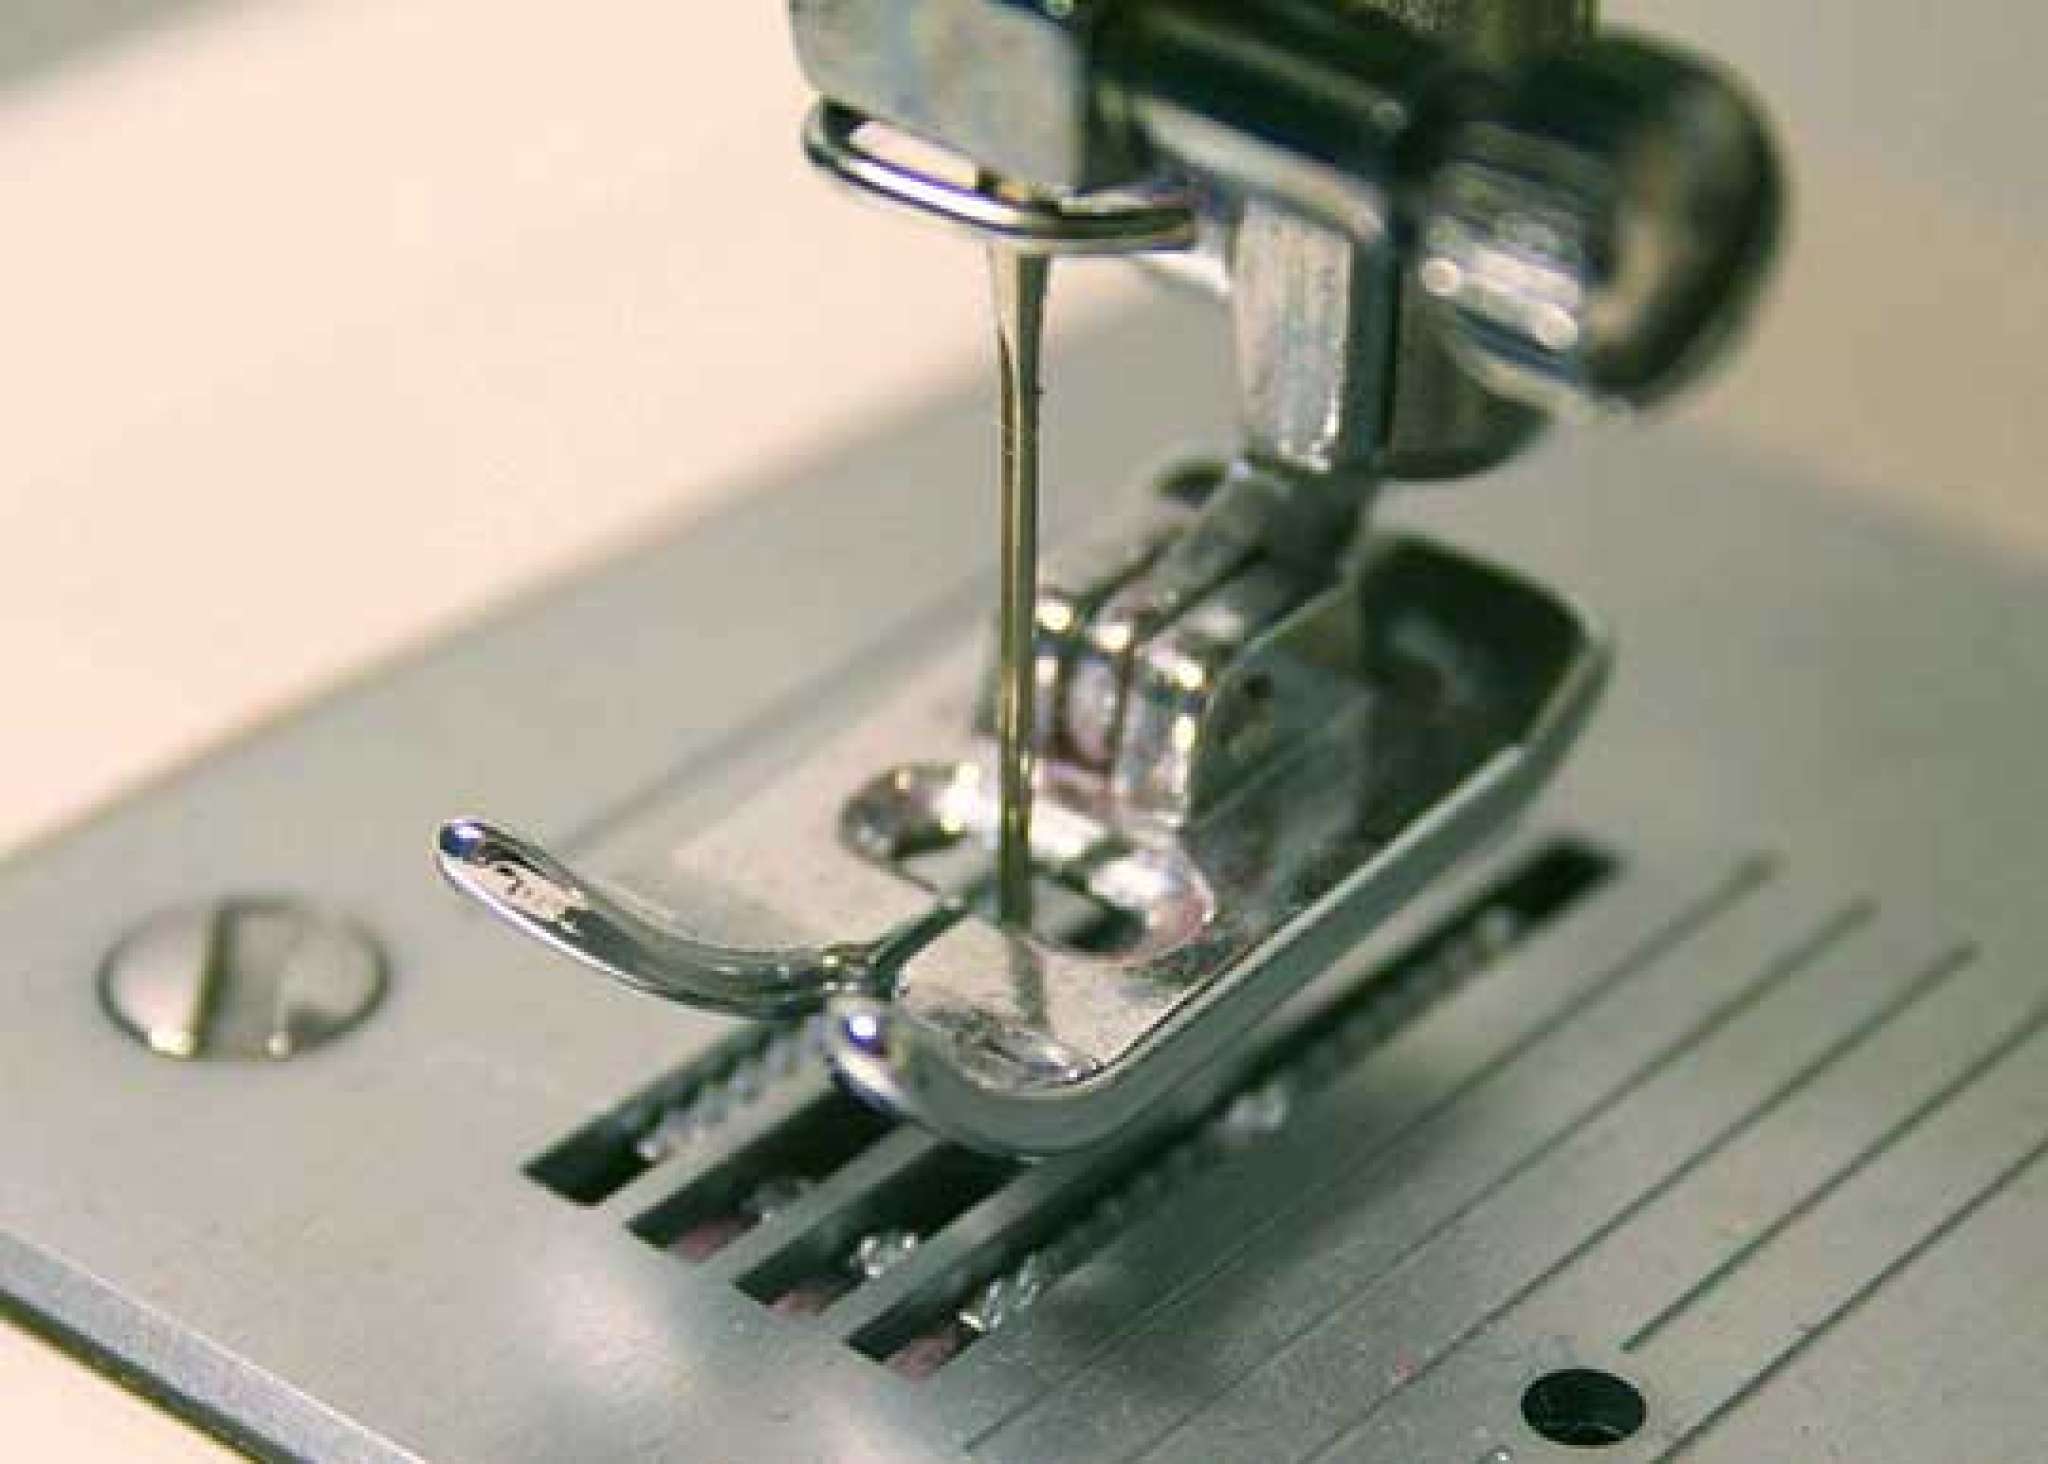 Sewing machine.